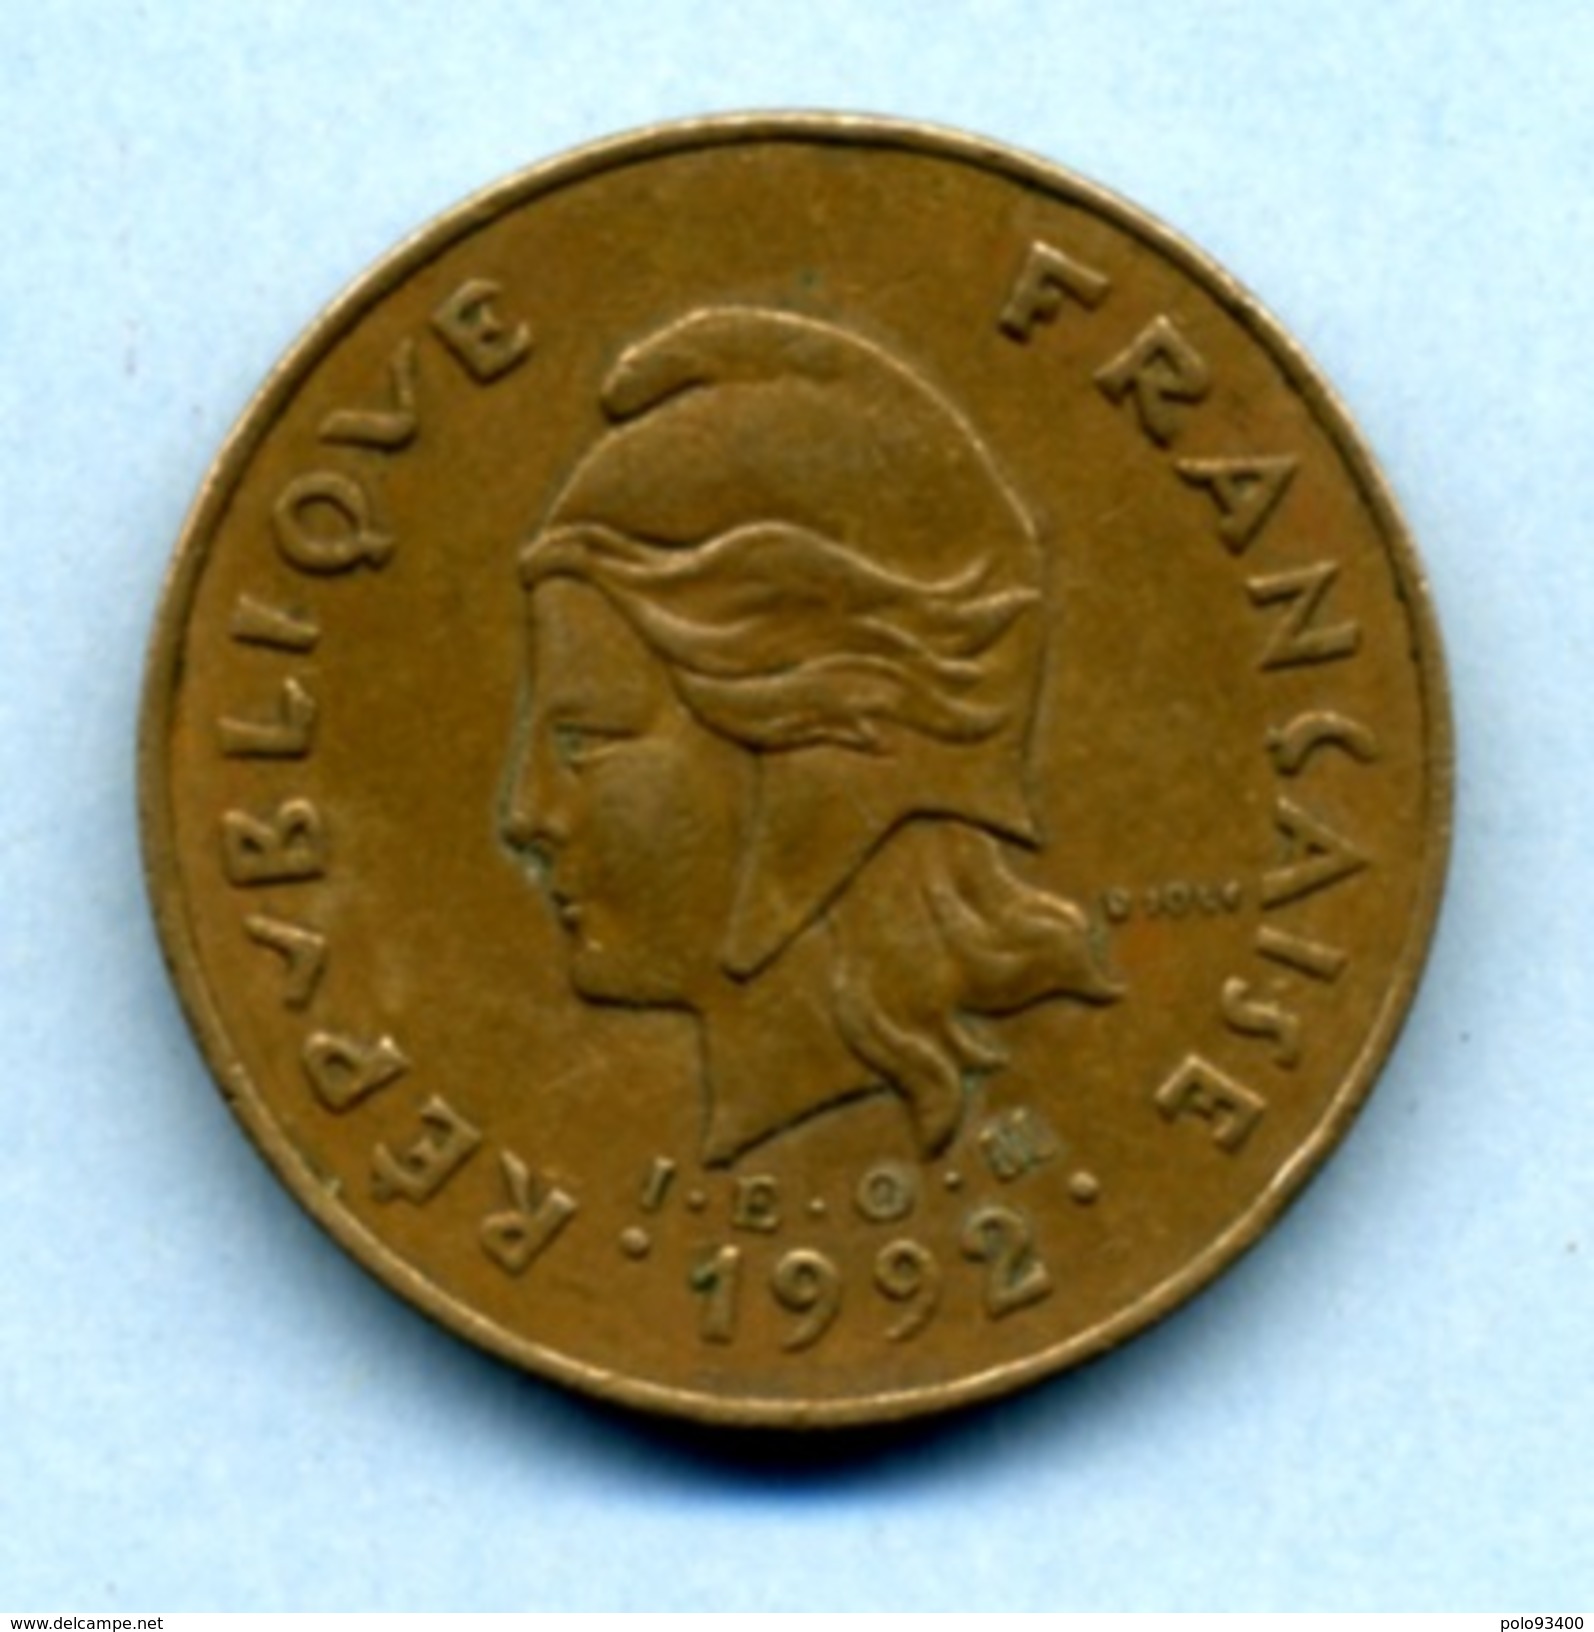 1992  100 FRANCS - French Polynesia